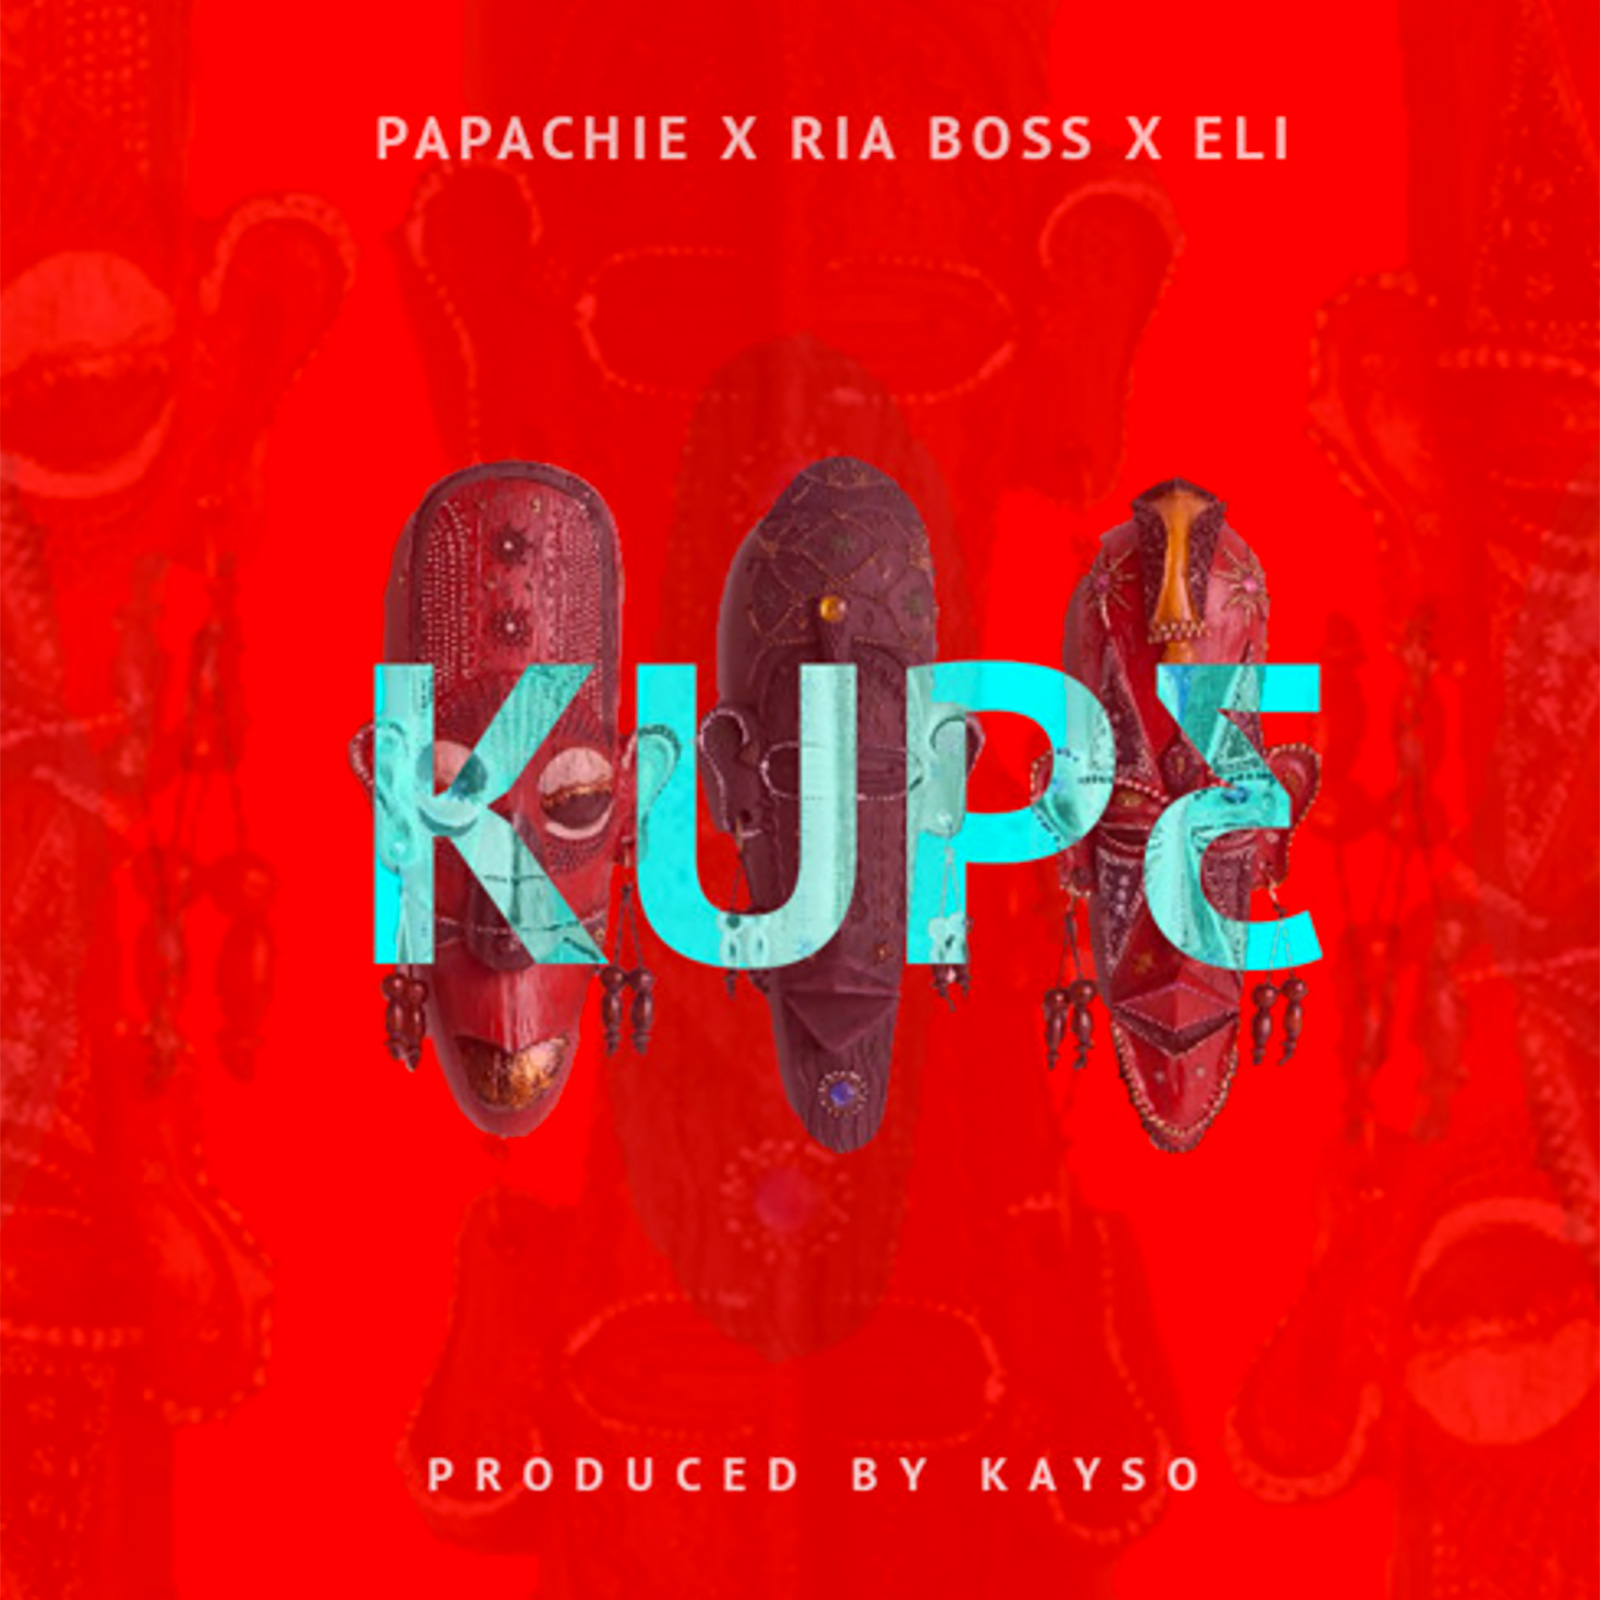 KUPƐ by Papa Chie feat. ELi & Ria Boss